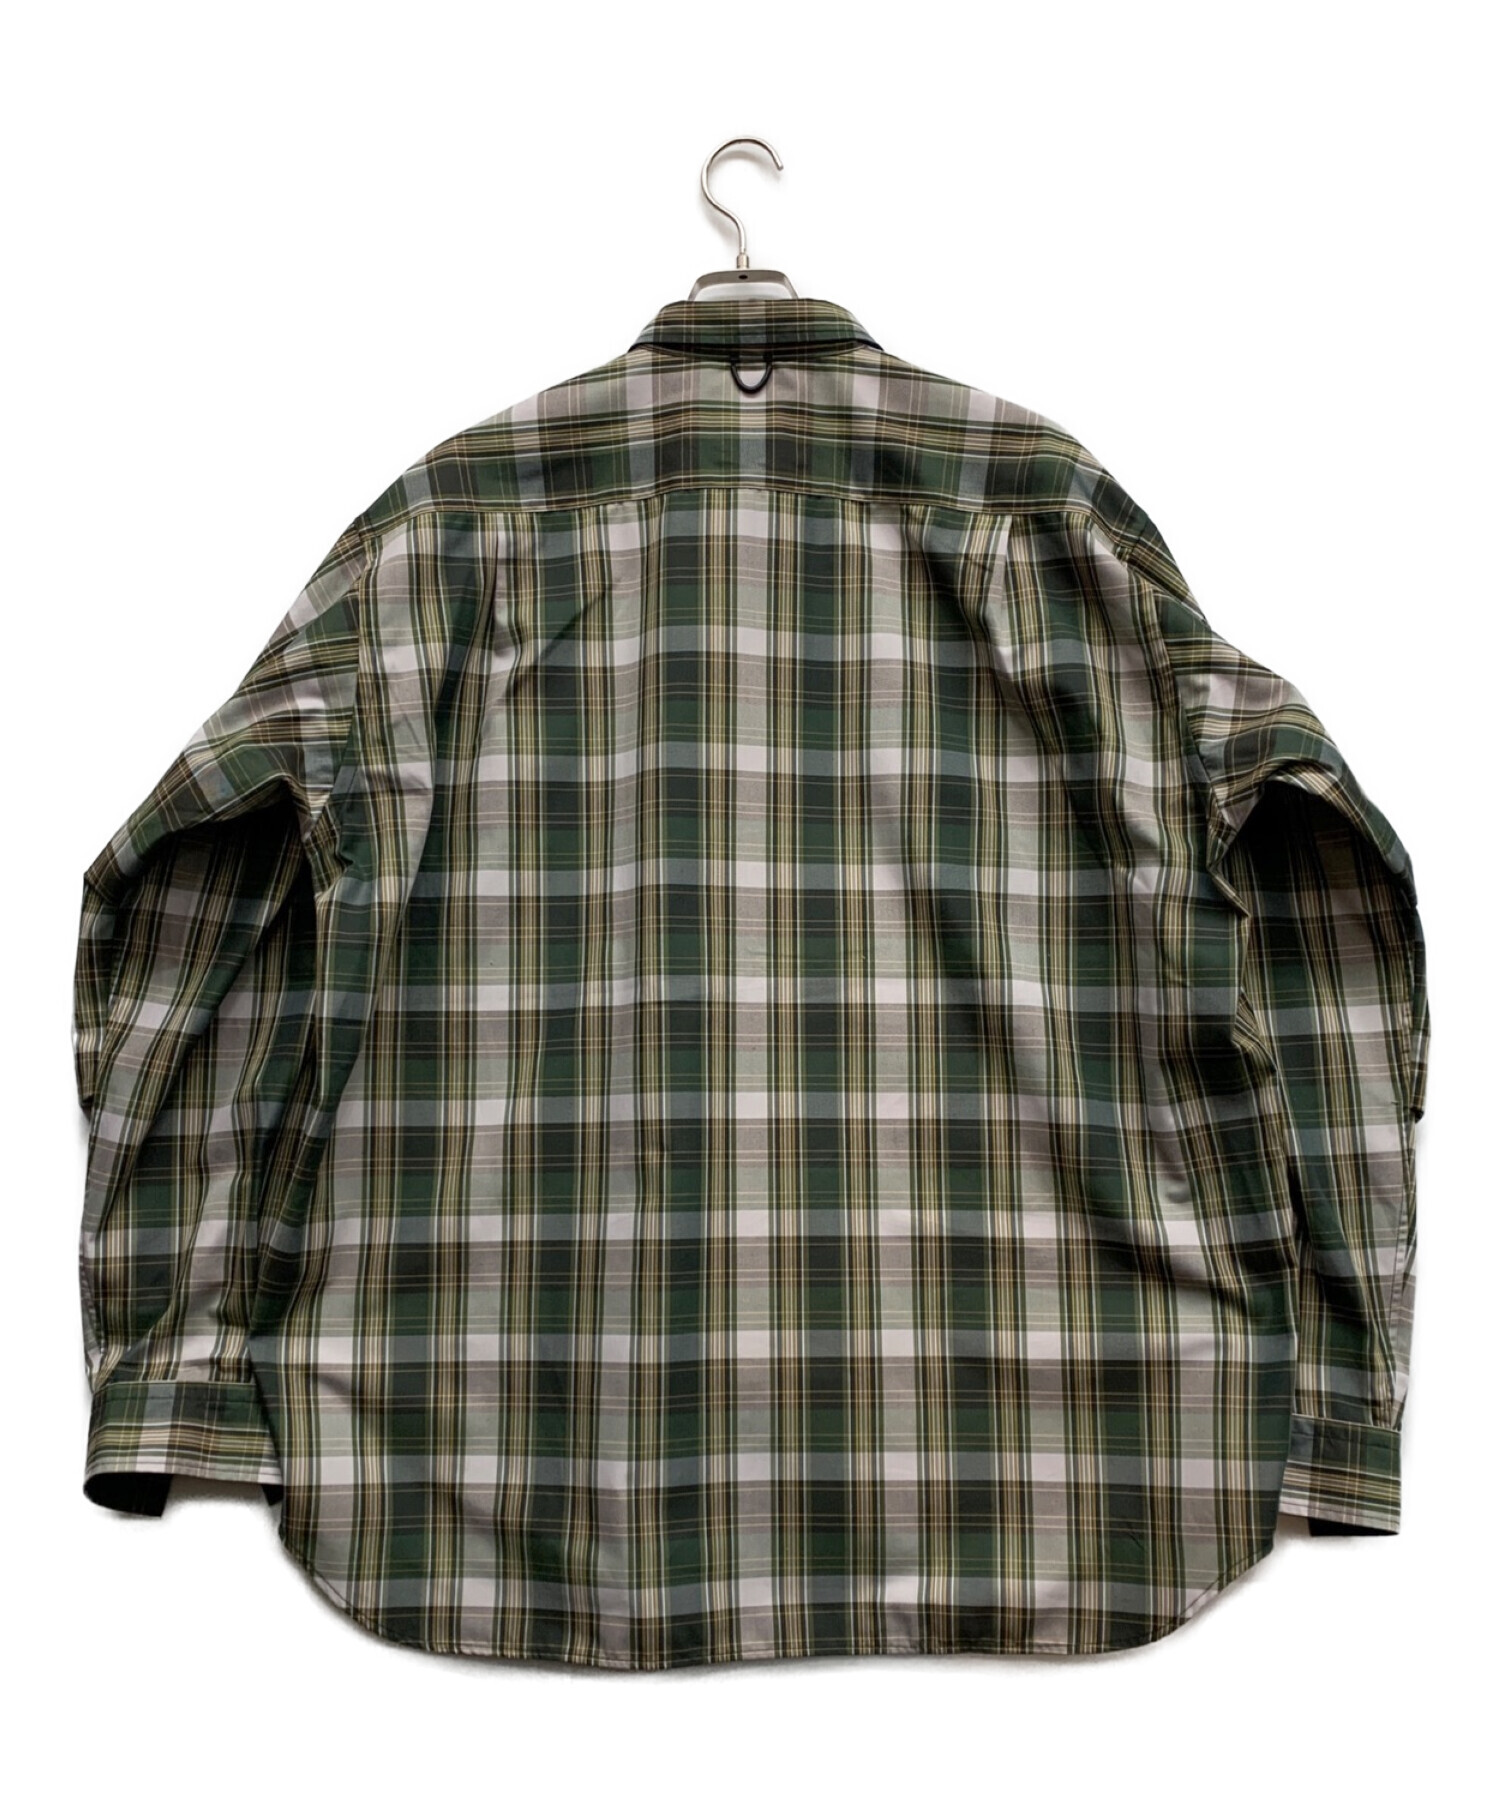 DAIWA PIER39 (ダイワ ピア39) チェックシャツ グリーン×ホワイト サイズ:L